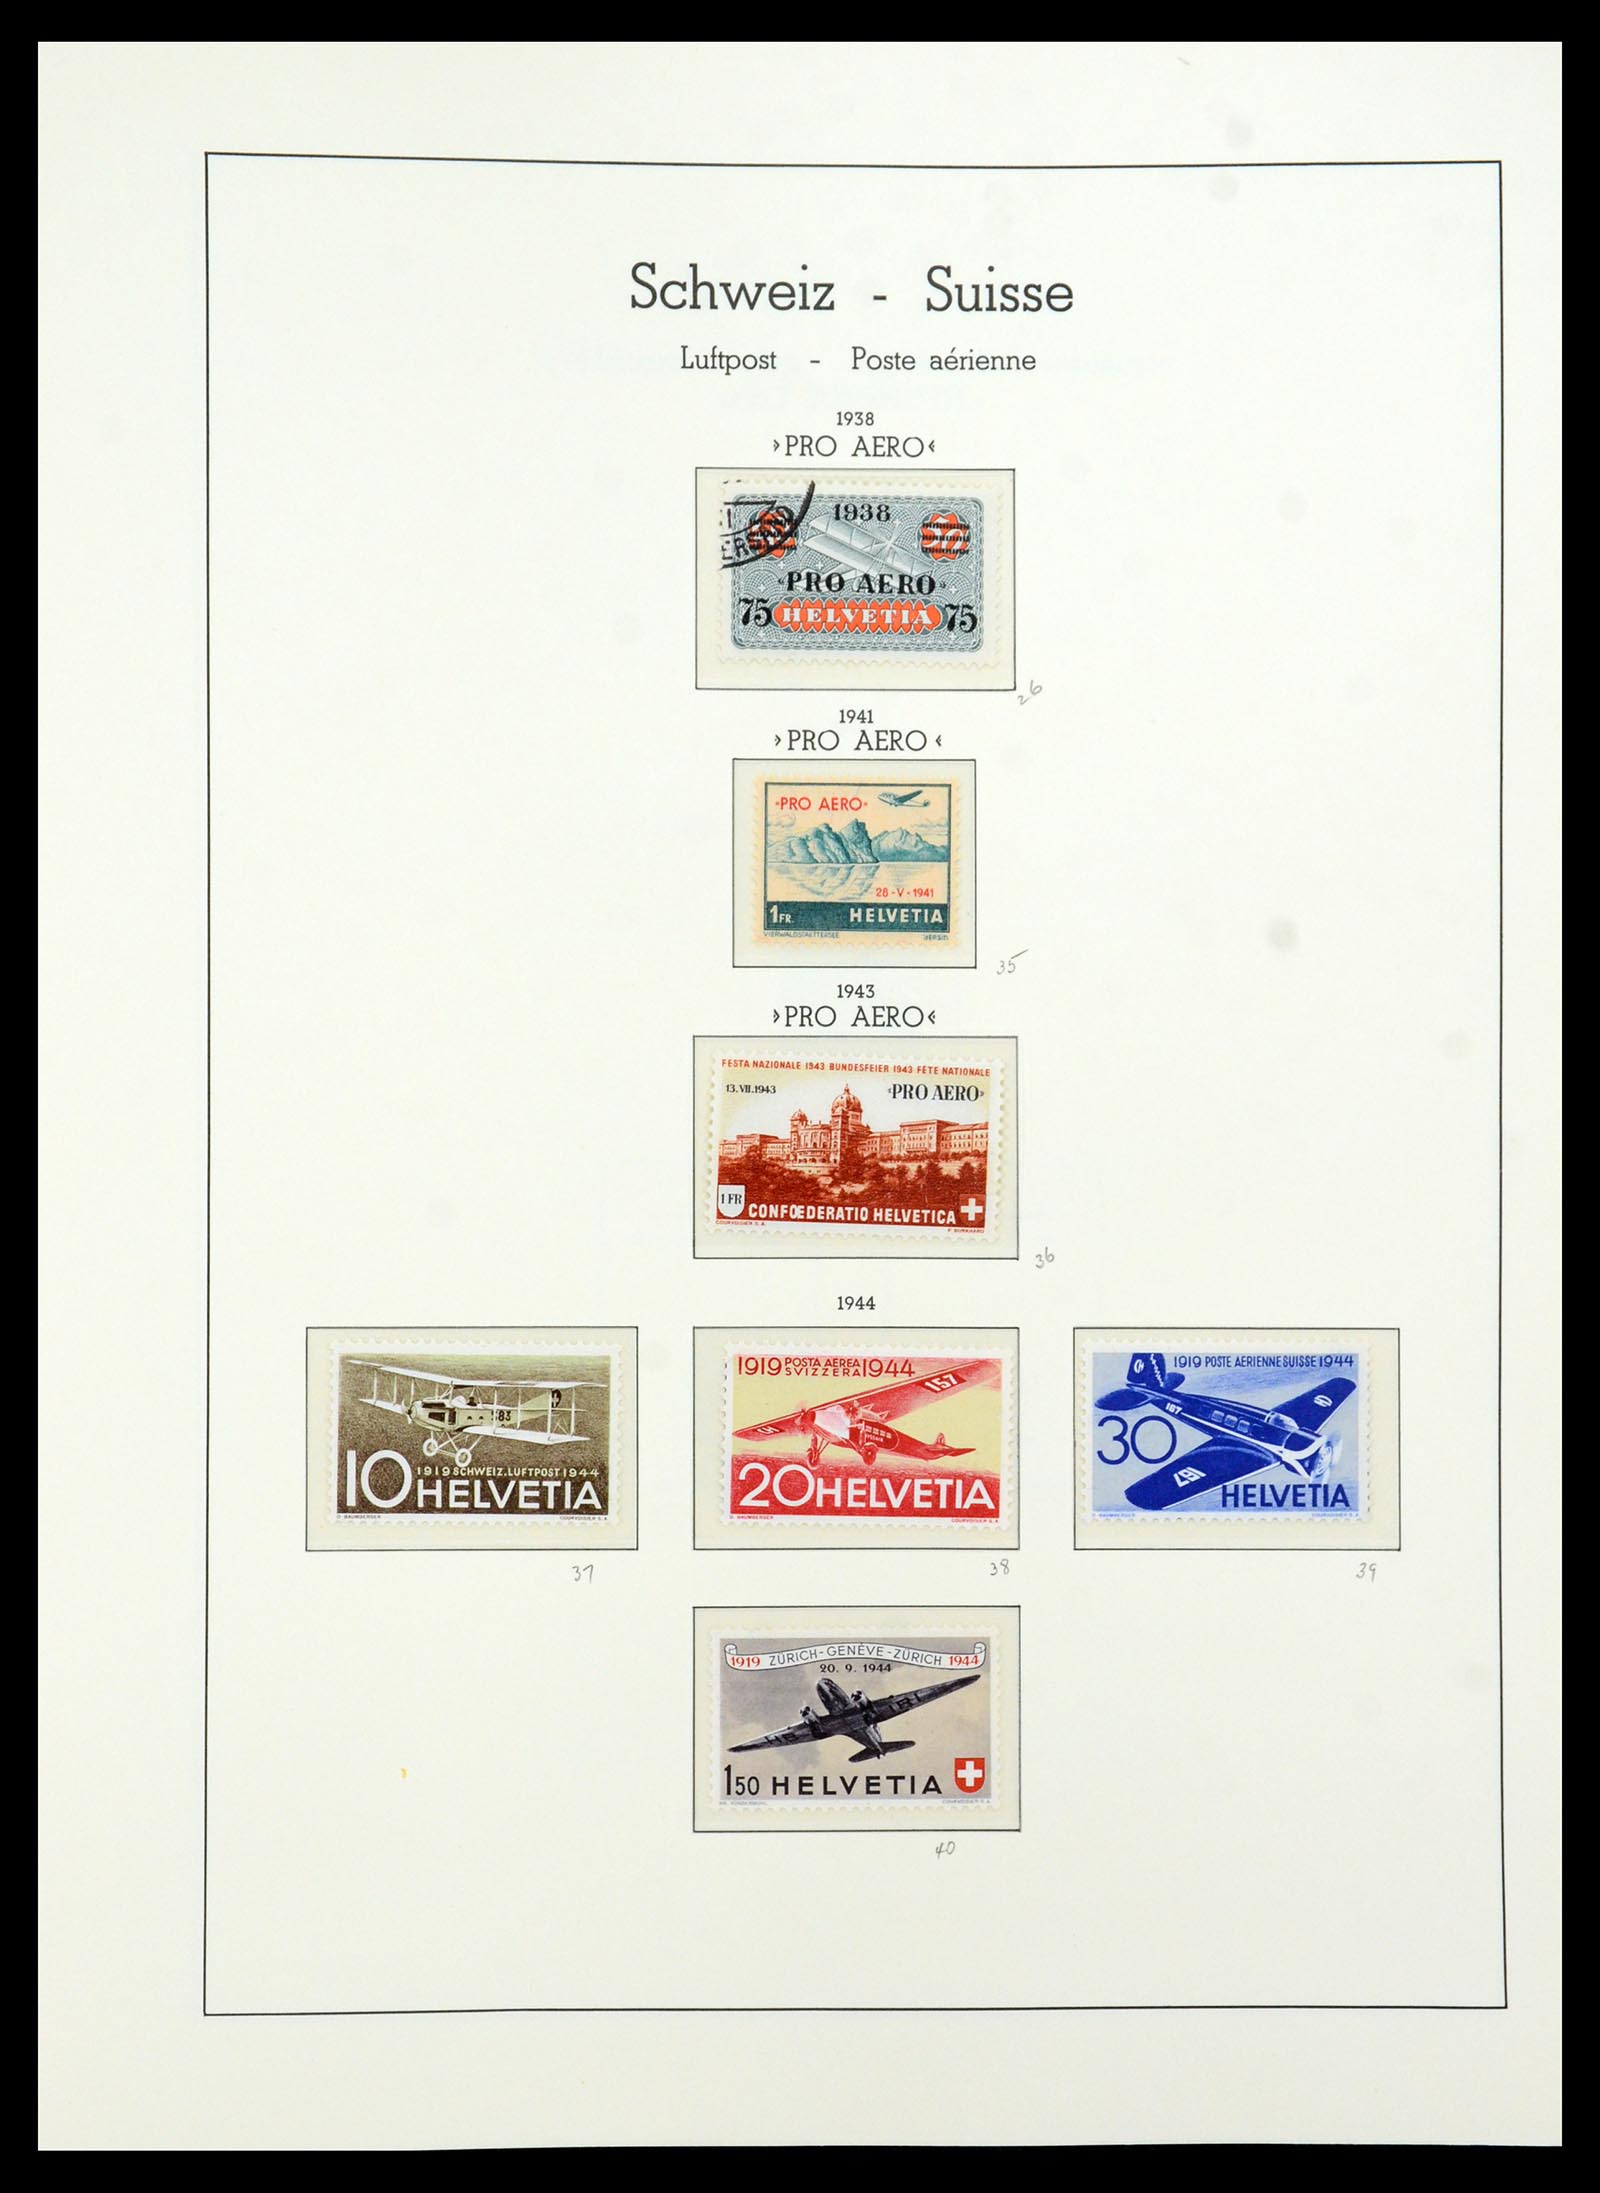 36284 032 - Stamp collection 36284 Switzerland 1854-2006.